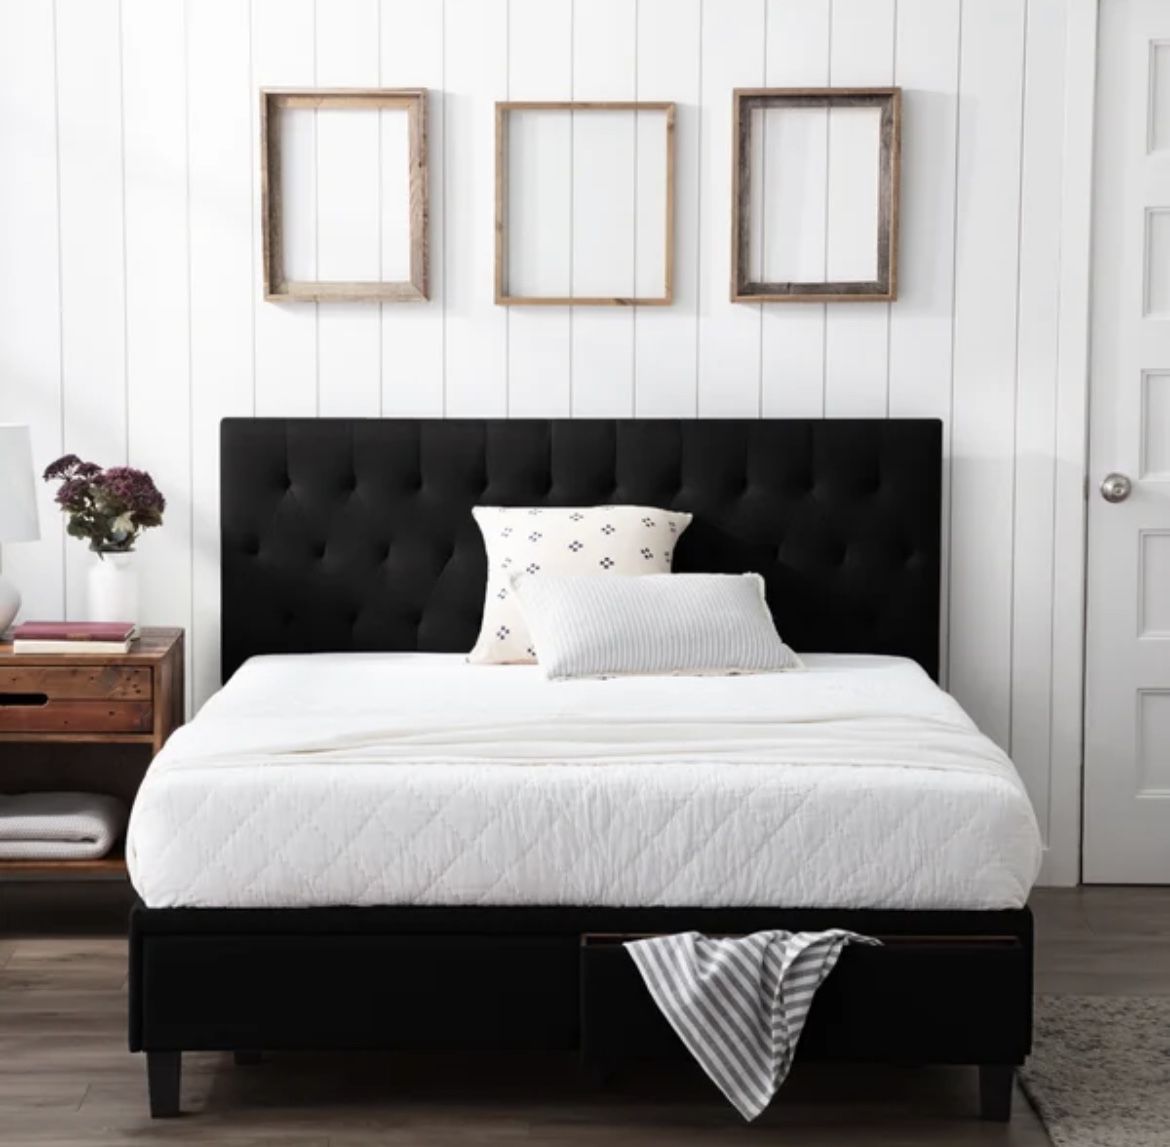 Brand New, Unopened Queen Bed w/ Storage